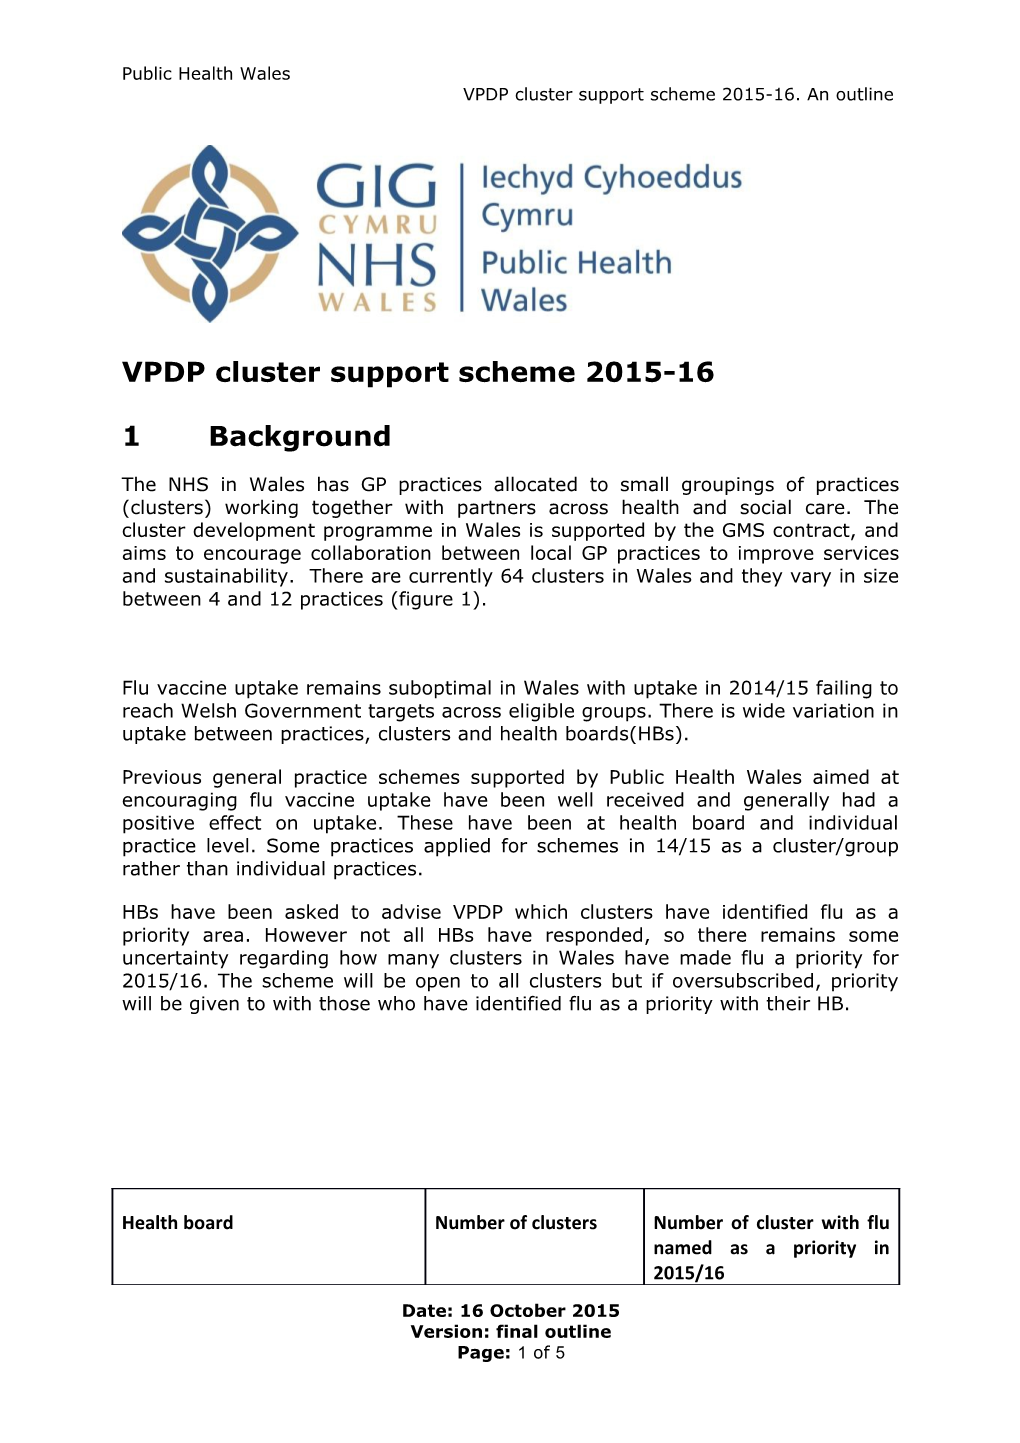 VPDP Cluster Support Scheme 2015-16